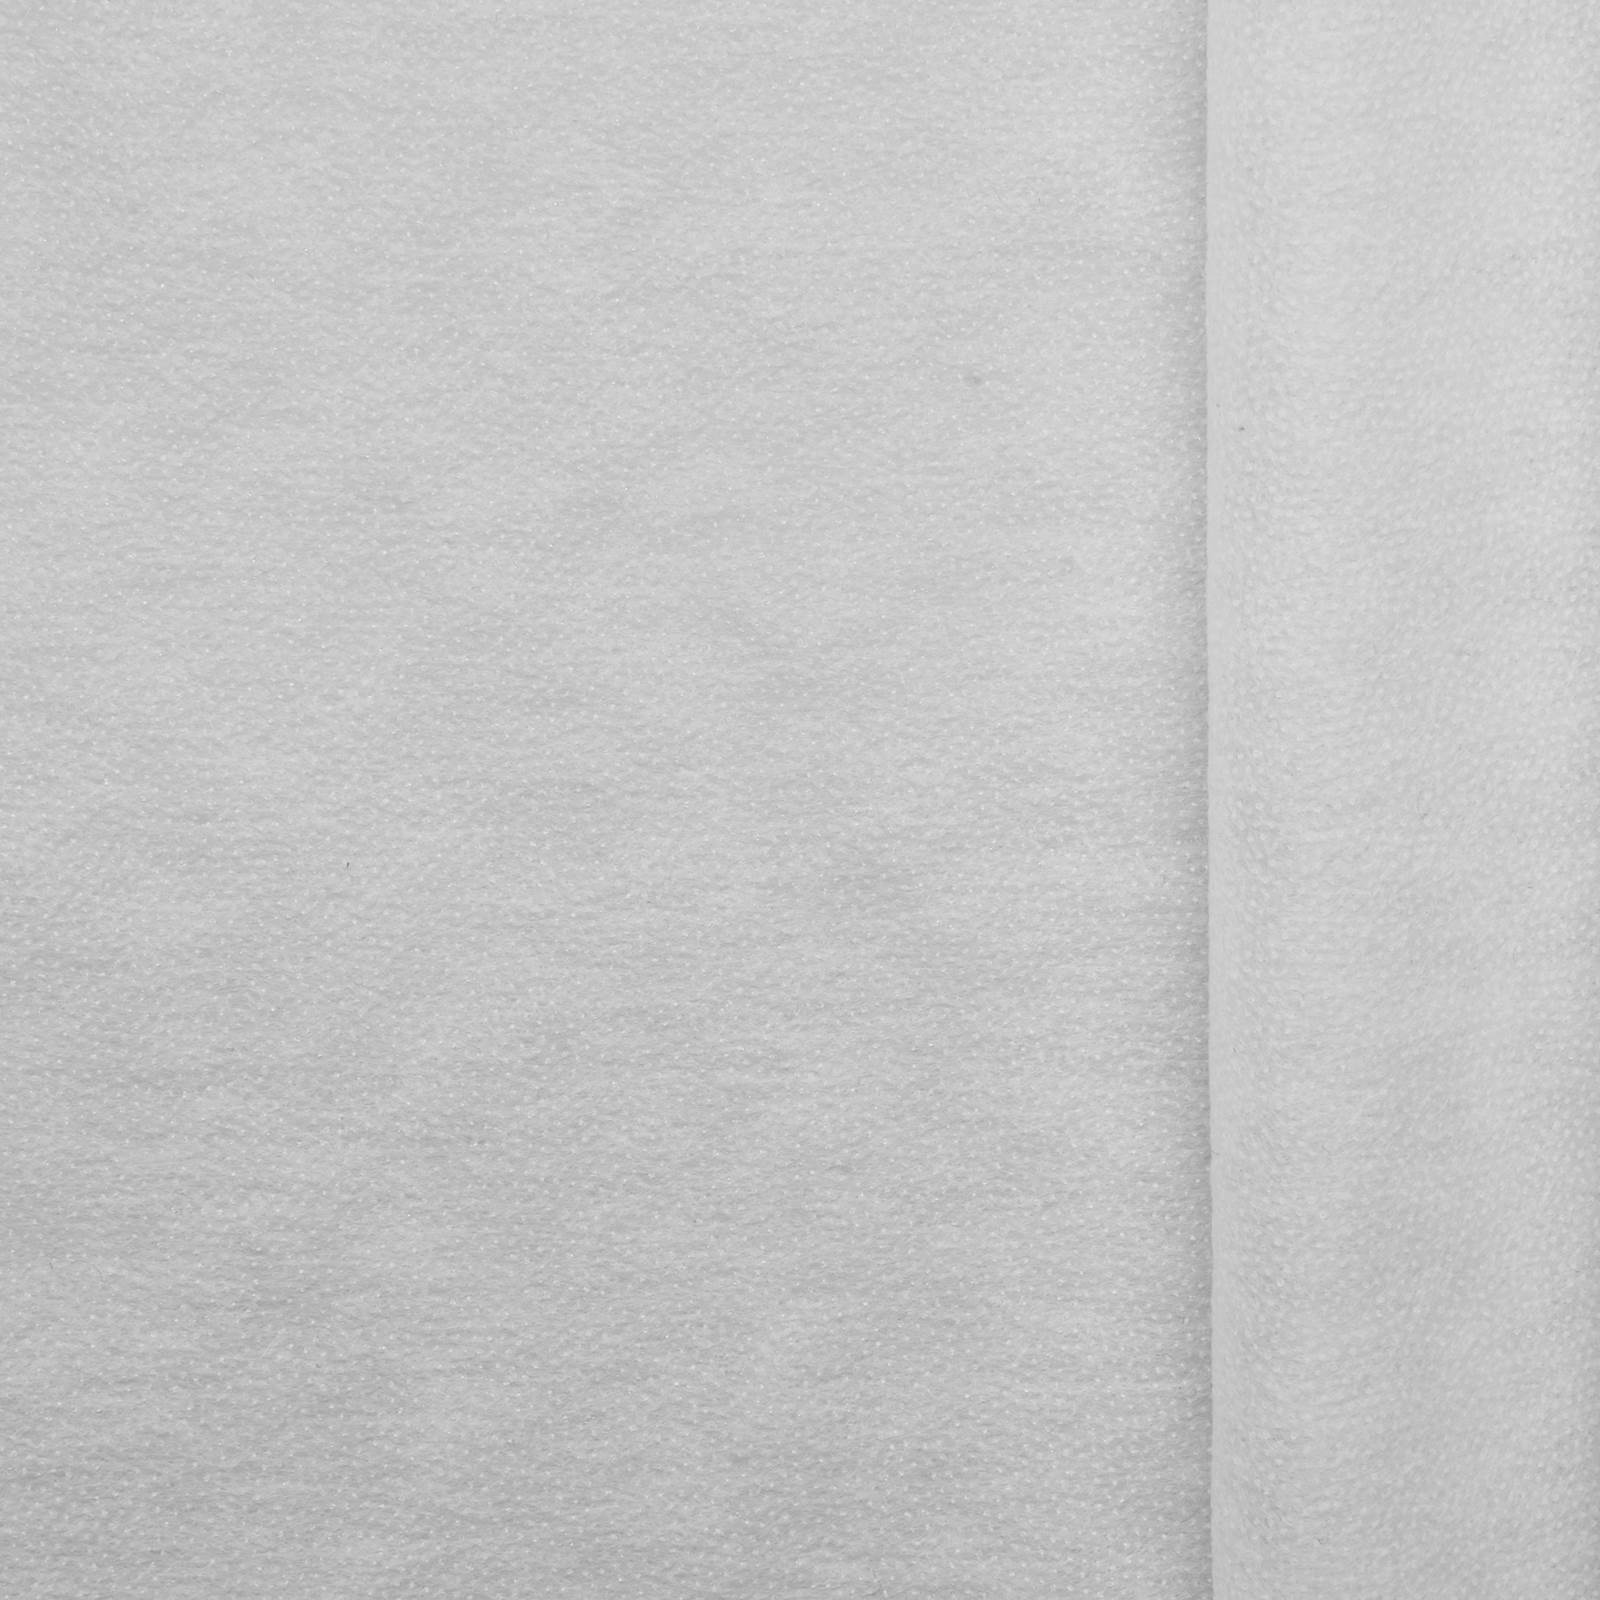 Vlieseline – termo-adesiva (branco)